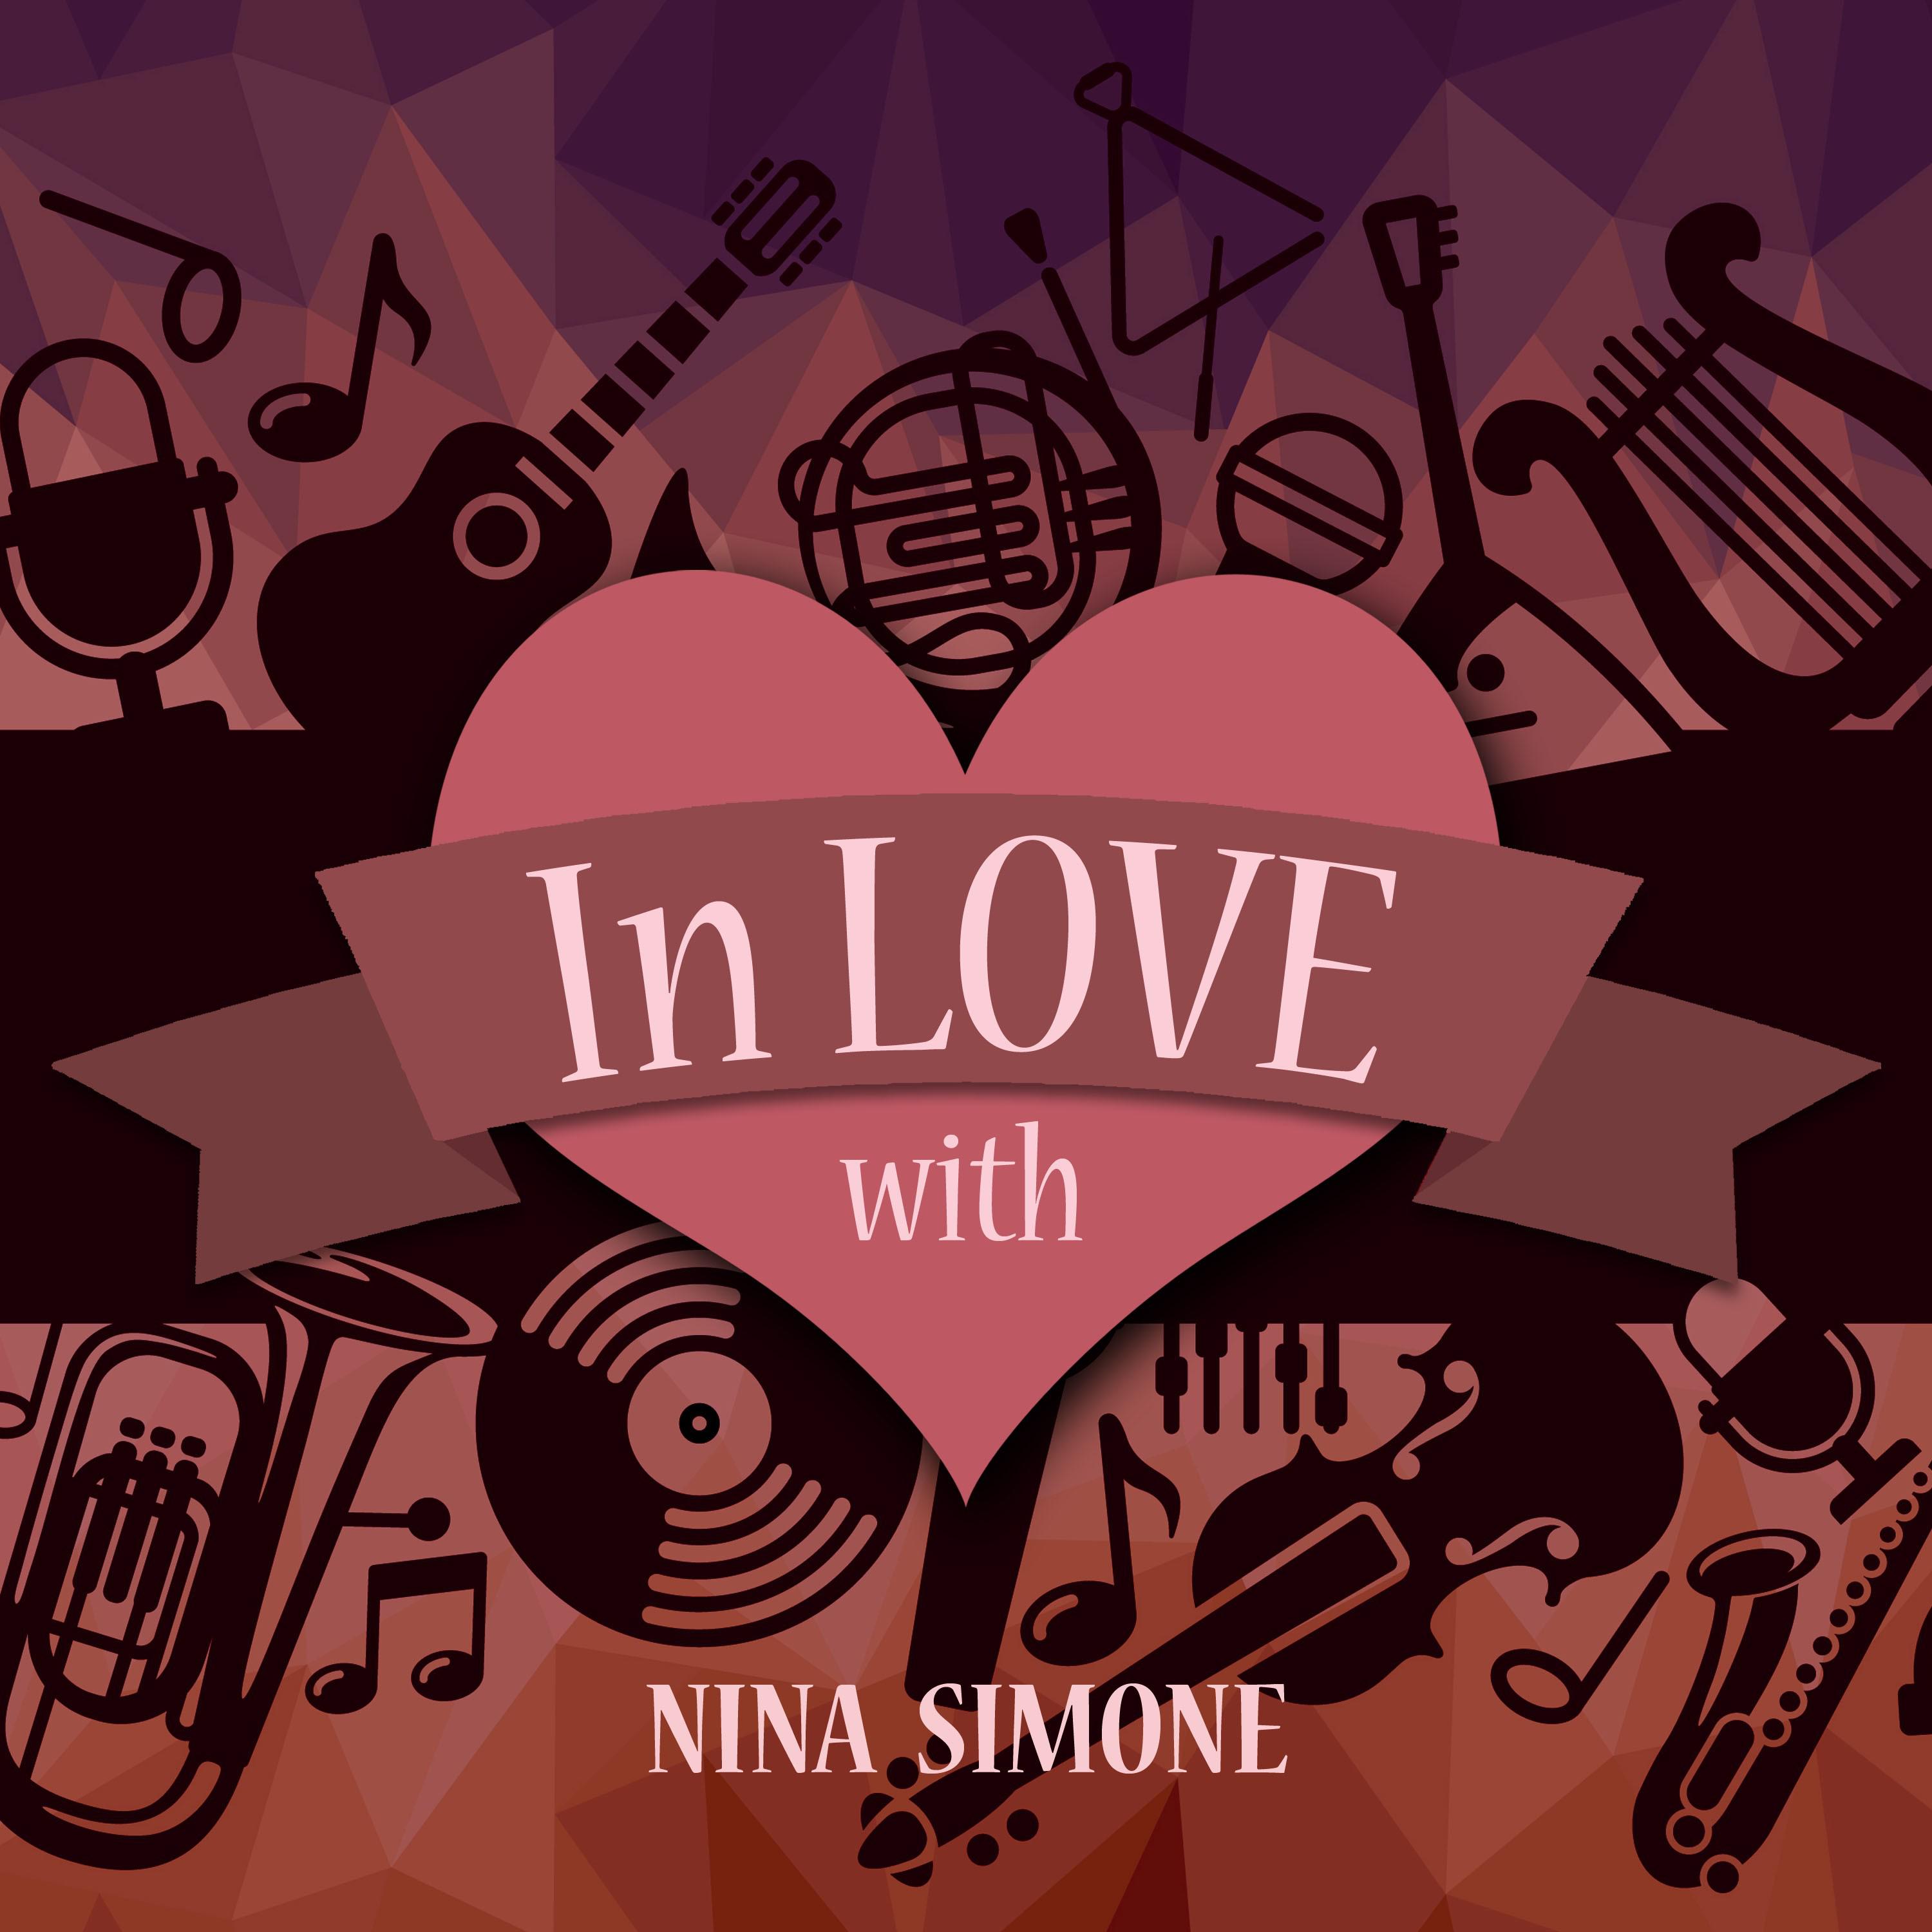 In Love with Nina Simone